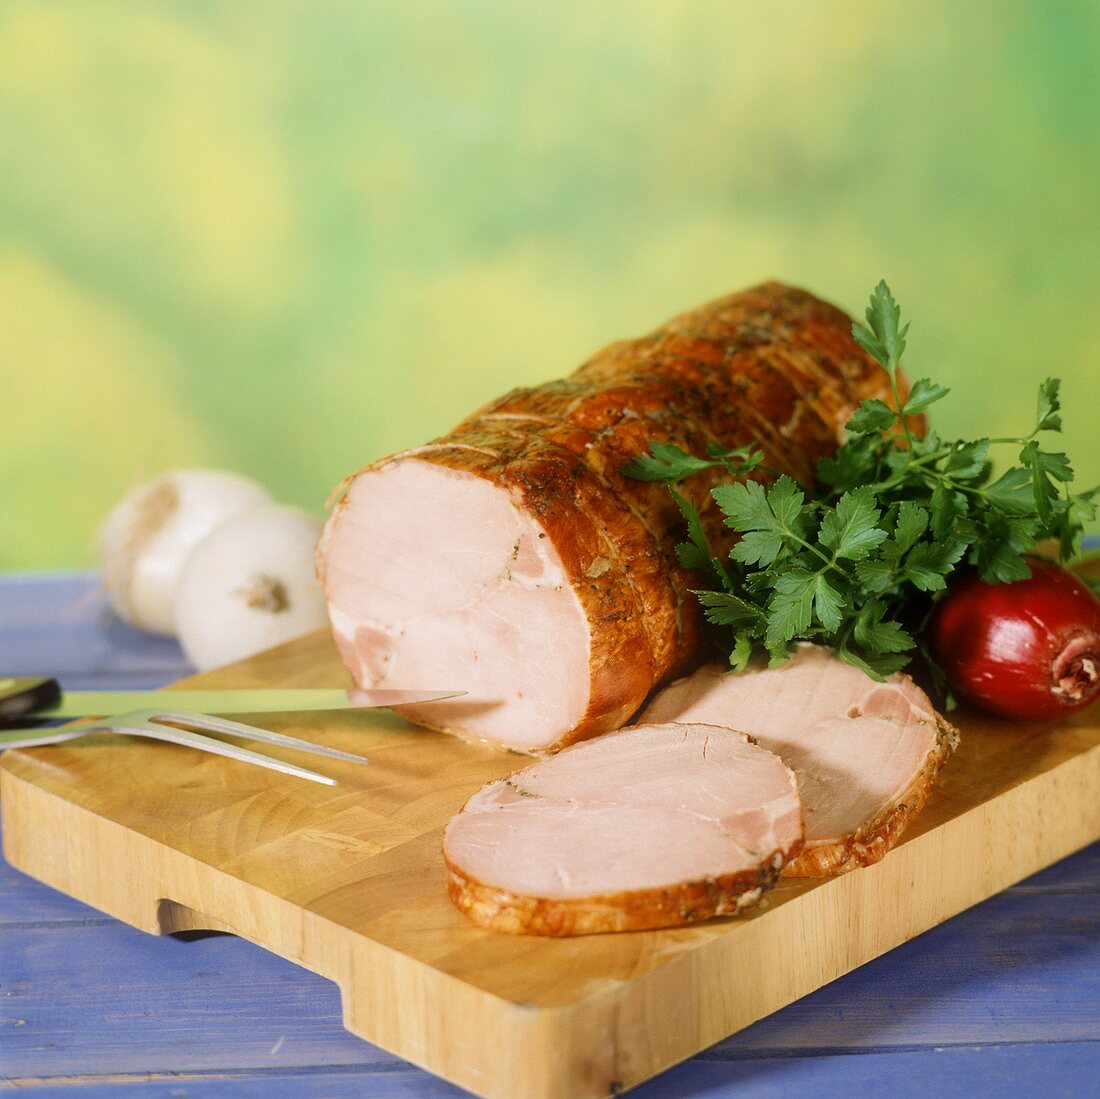 Cold roast pork roll on wooden board, carved